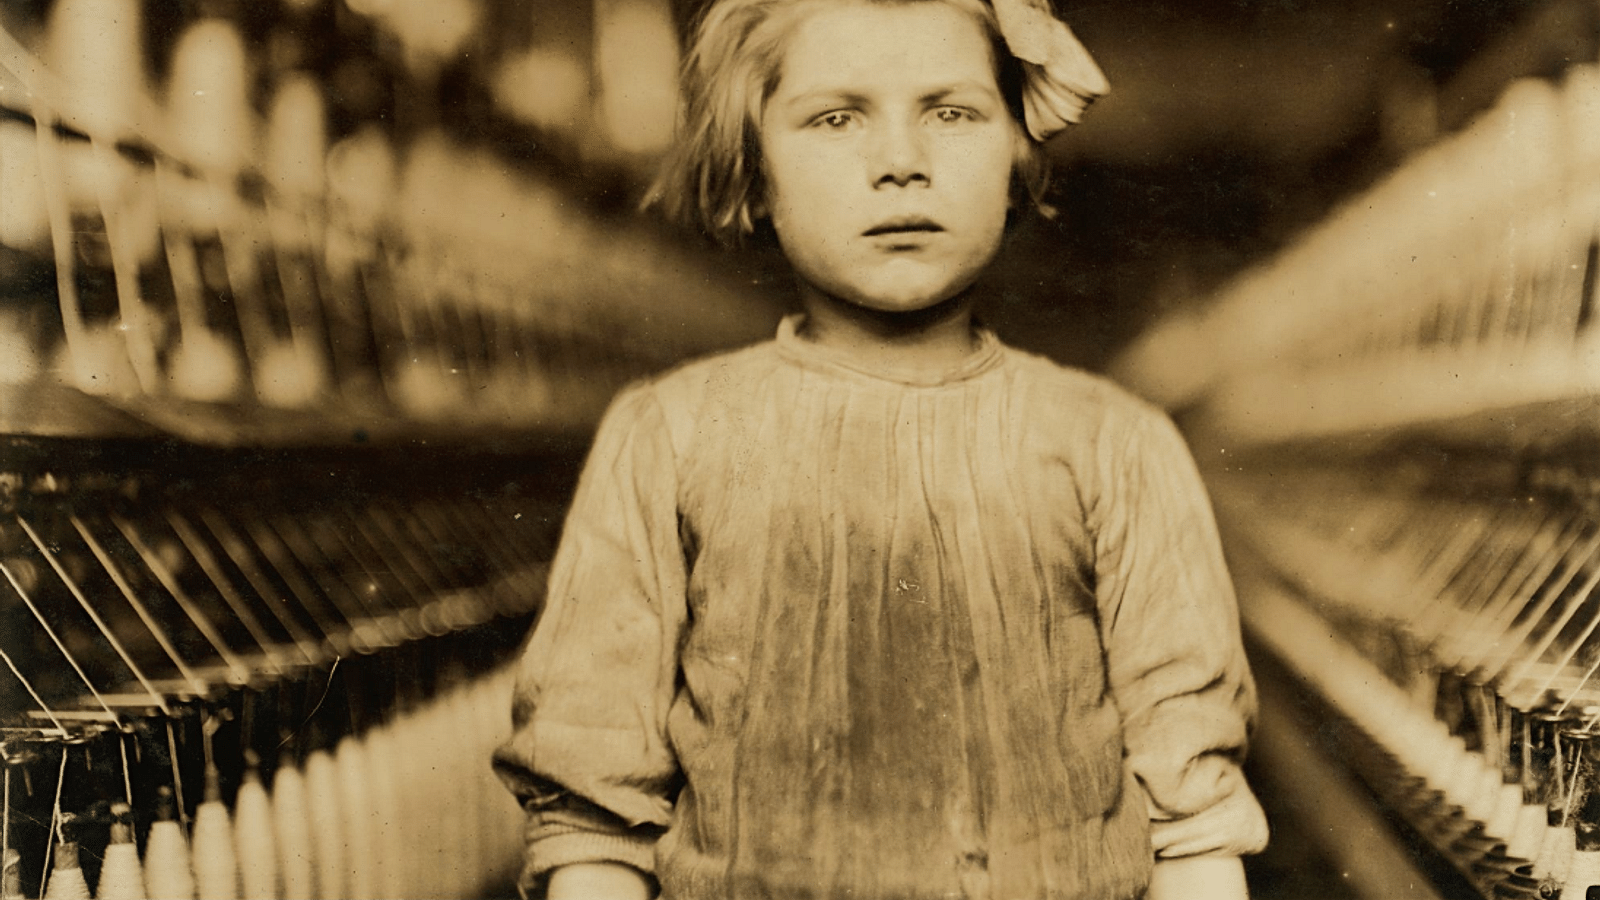 child labor industrial revolution textile mills